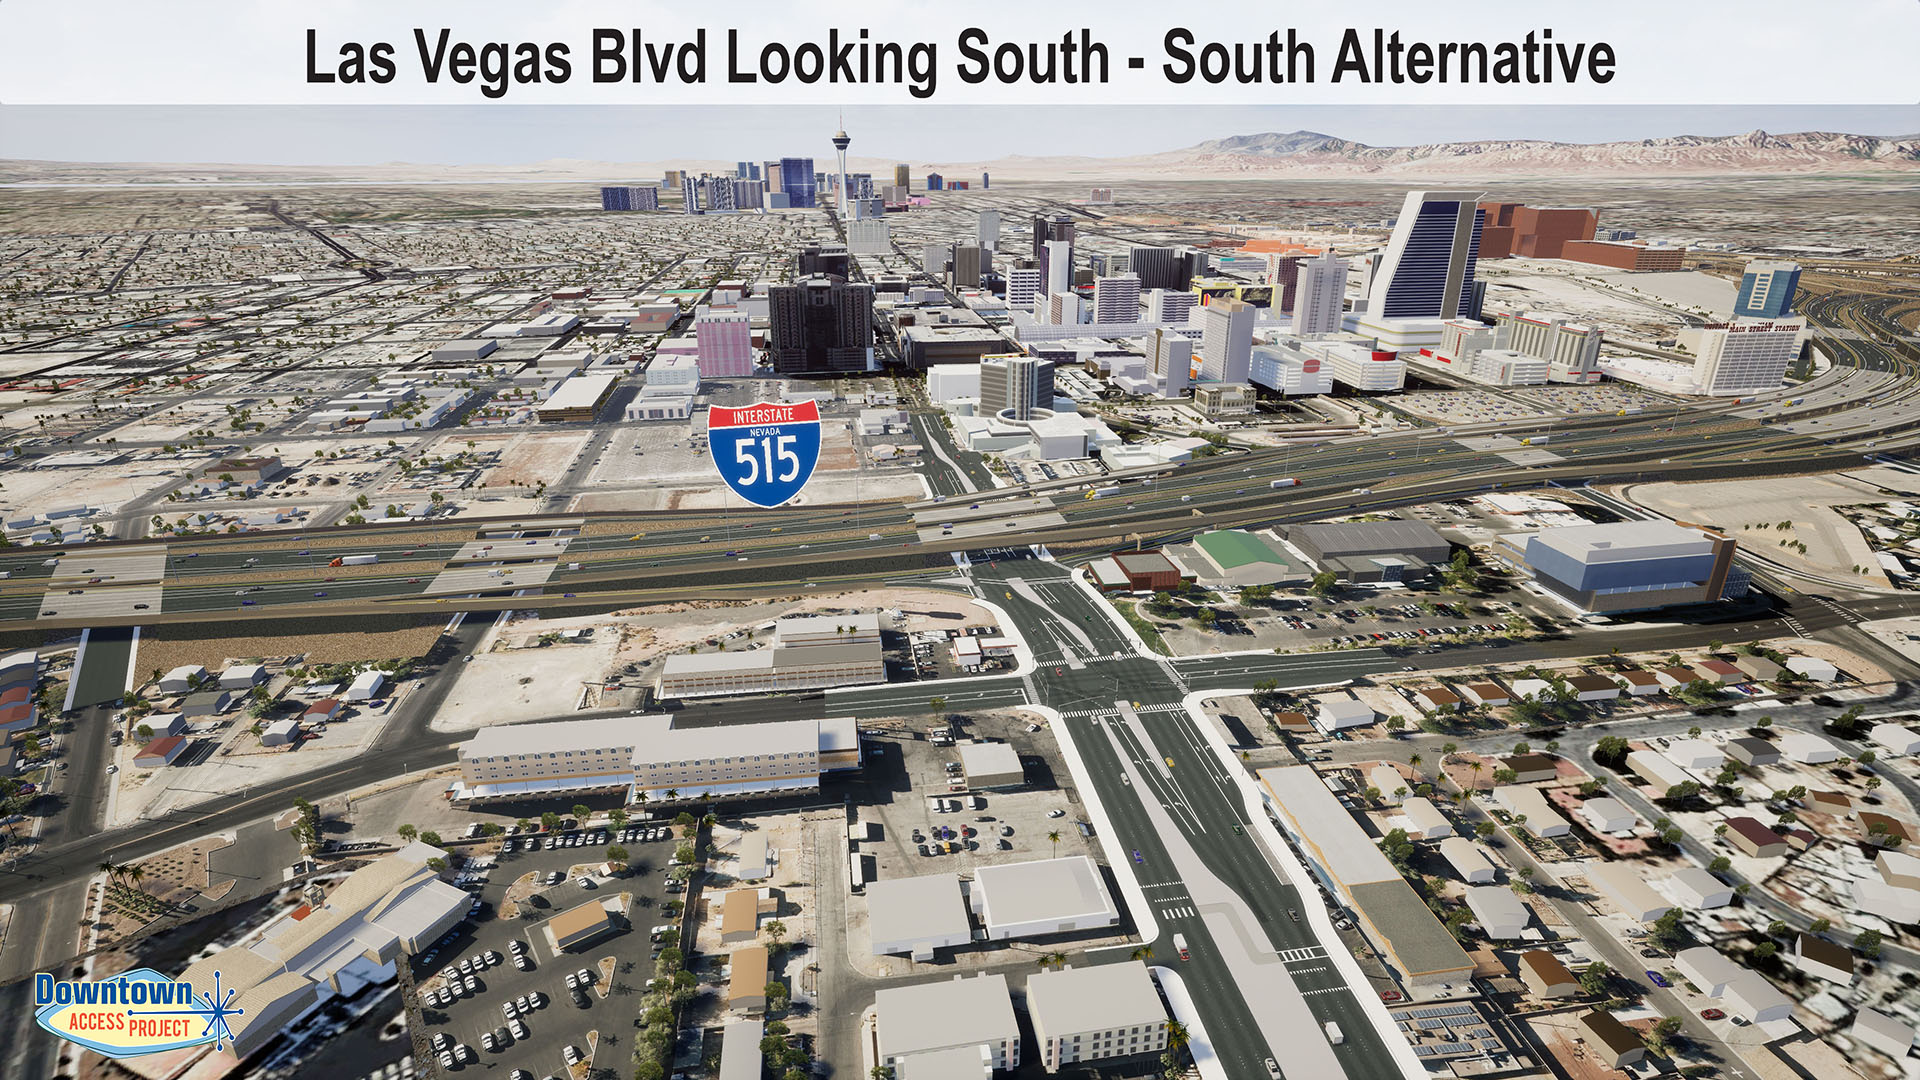 Las Vegas Blvd Looking South - South Alternative